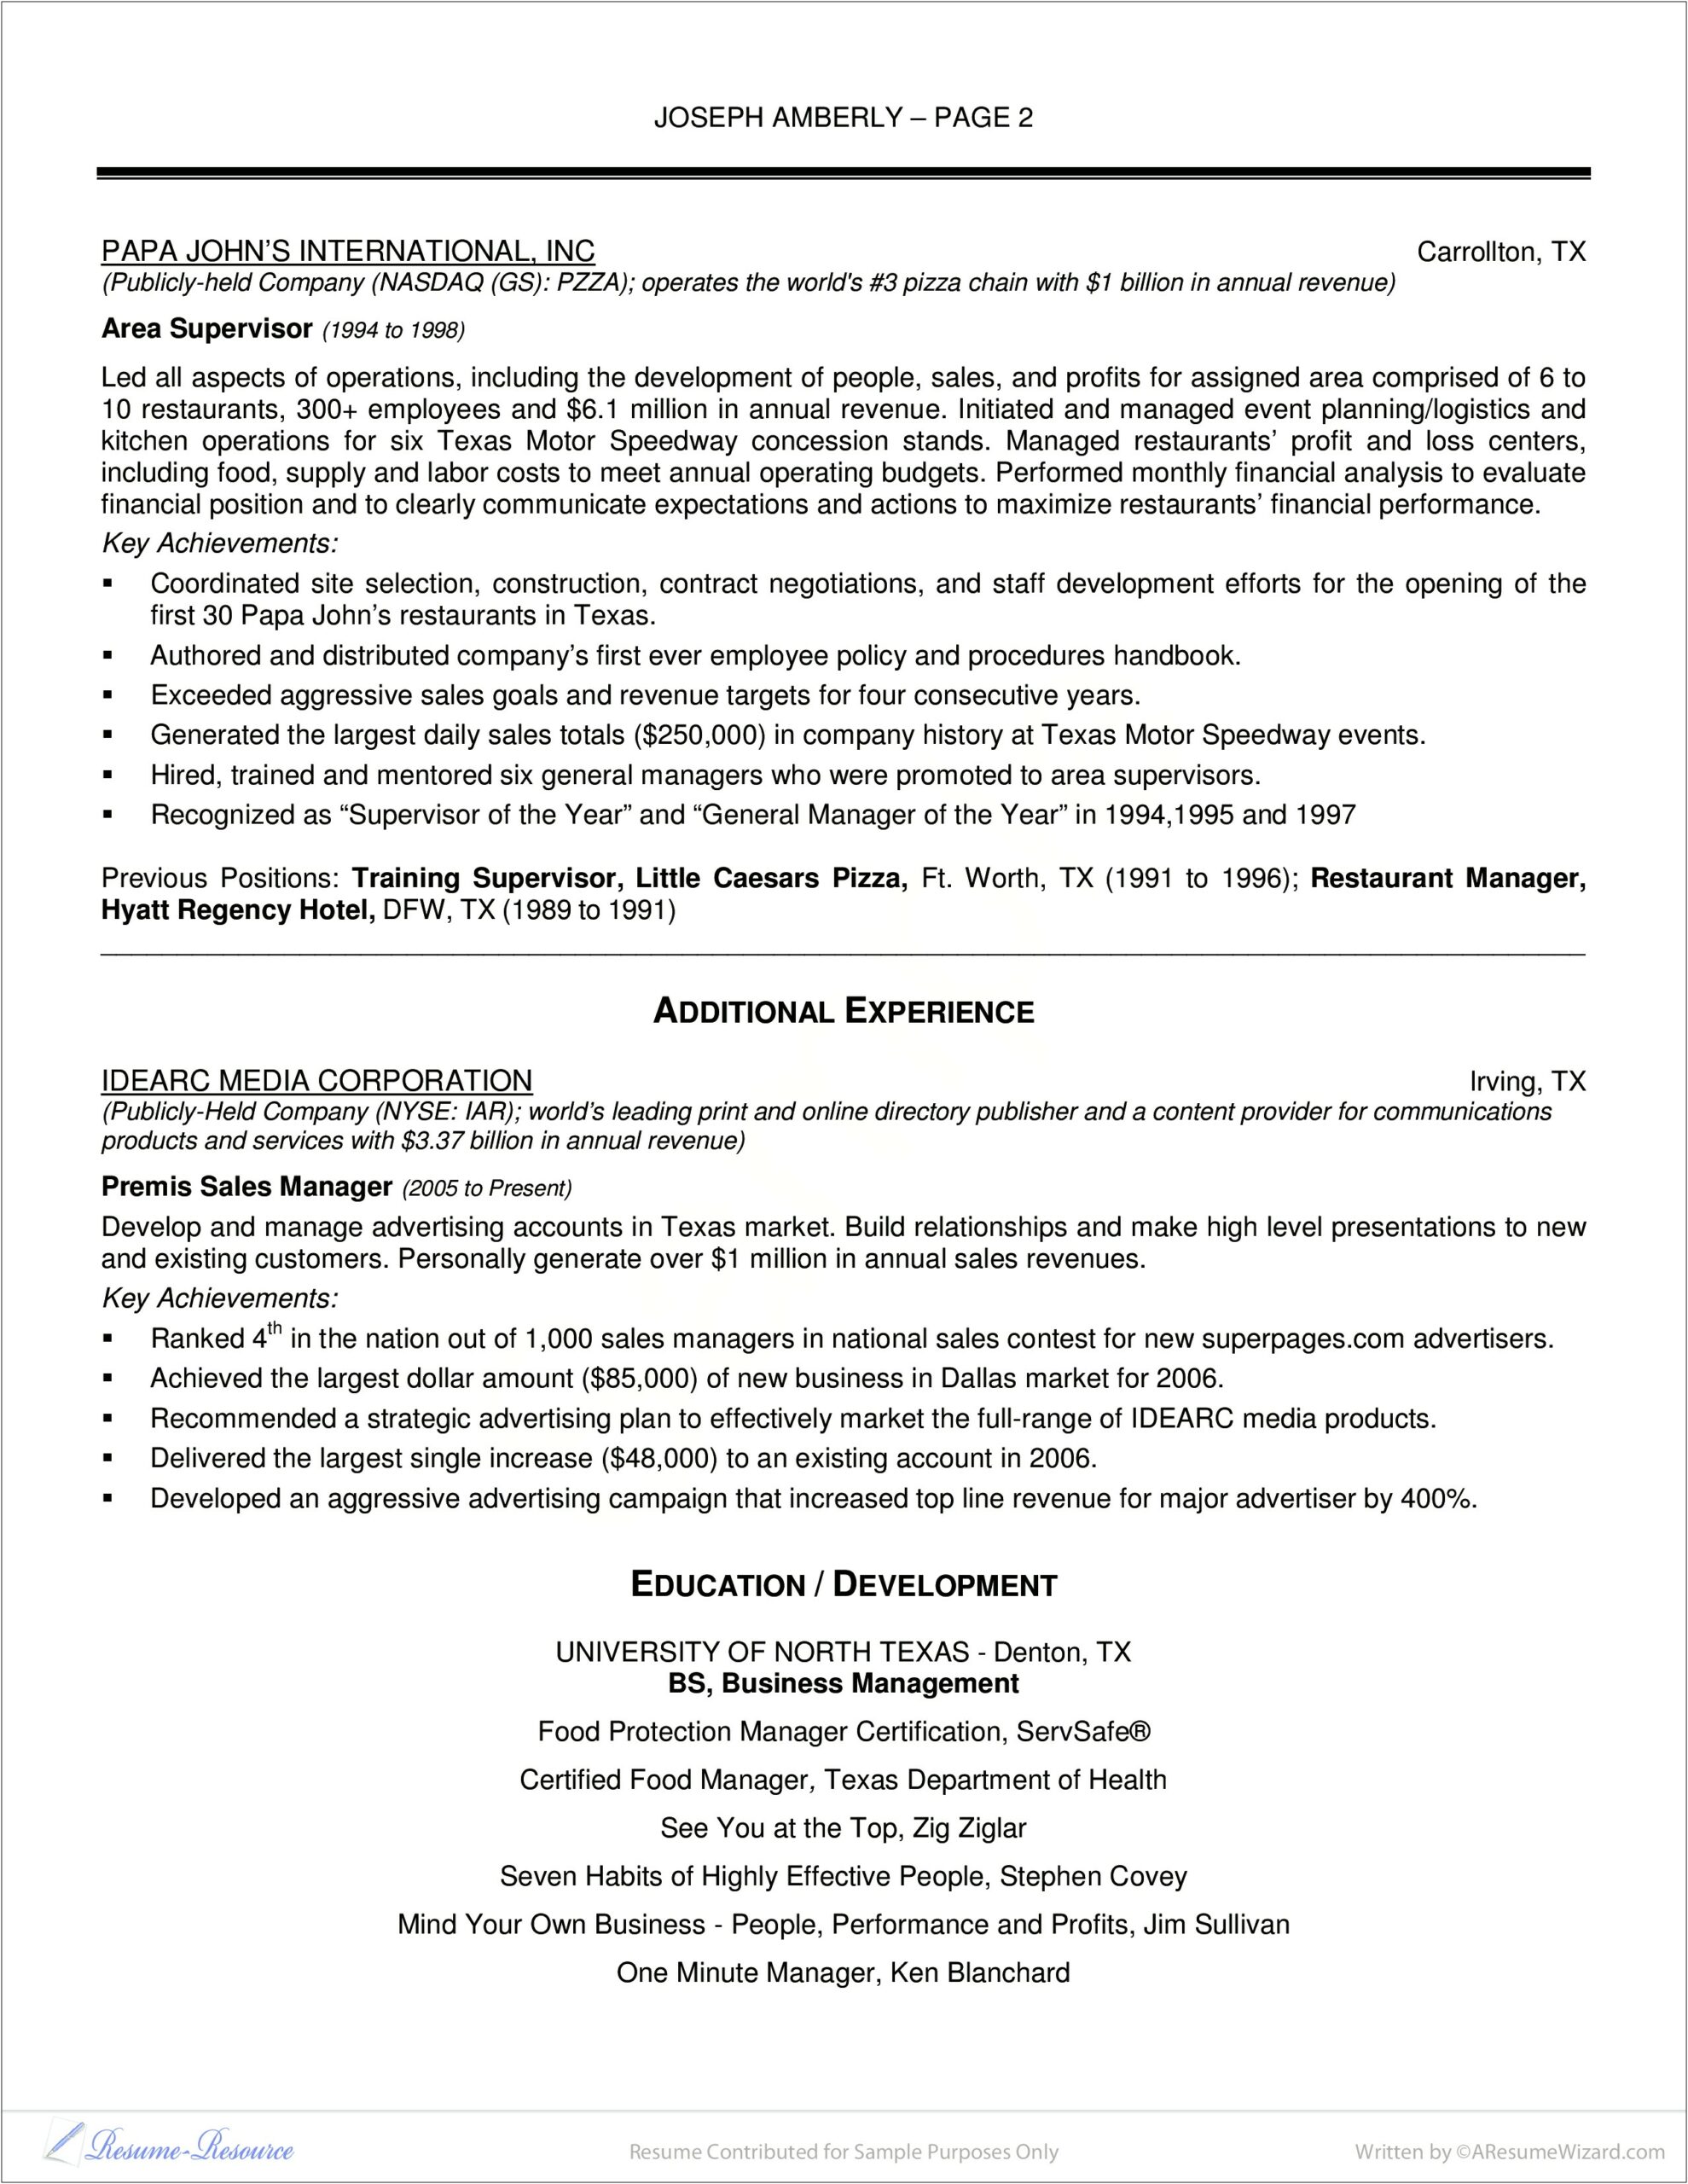 Sample Resume For Restaurant Manager Position